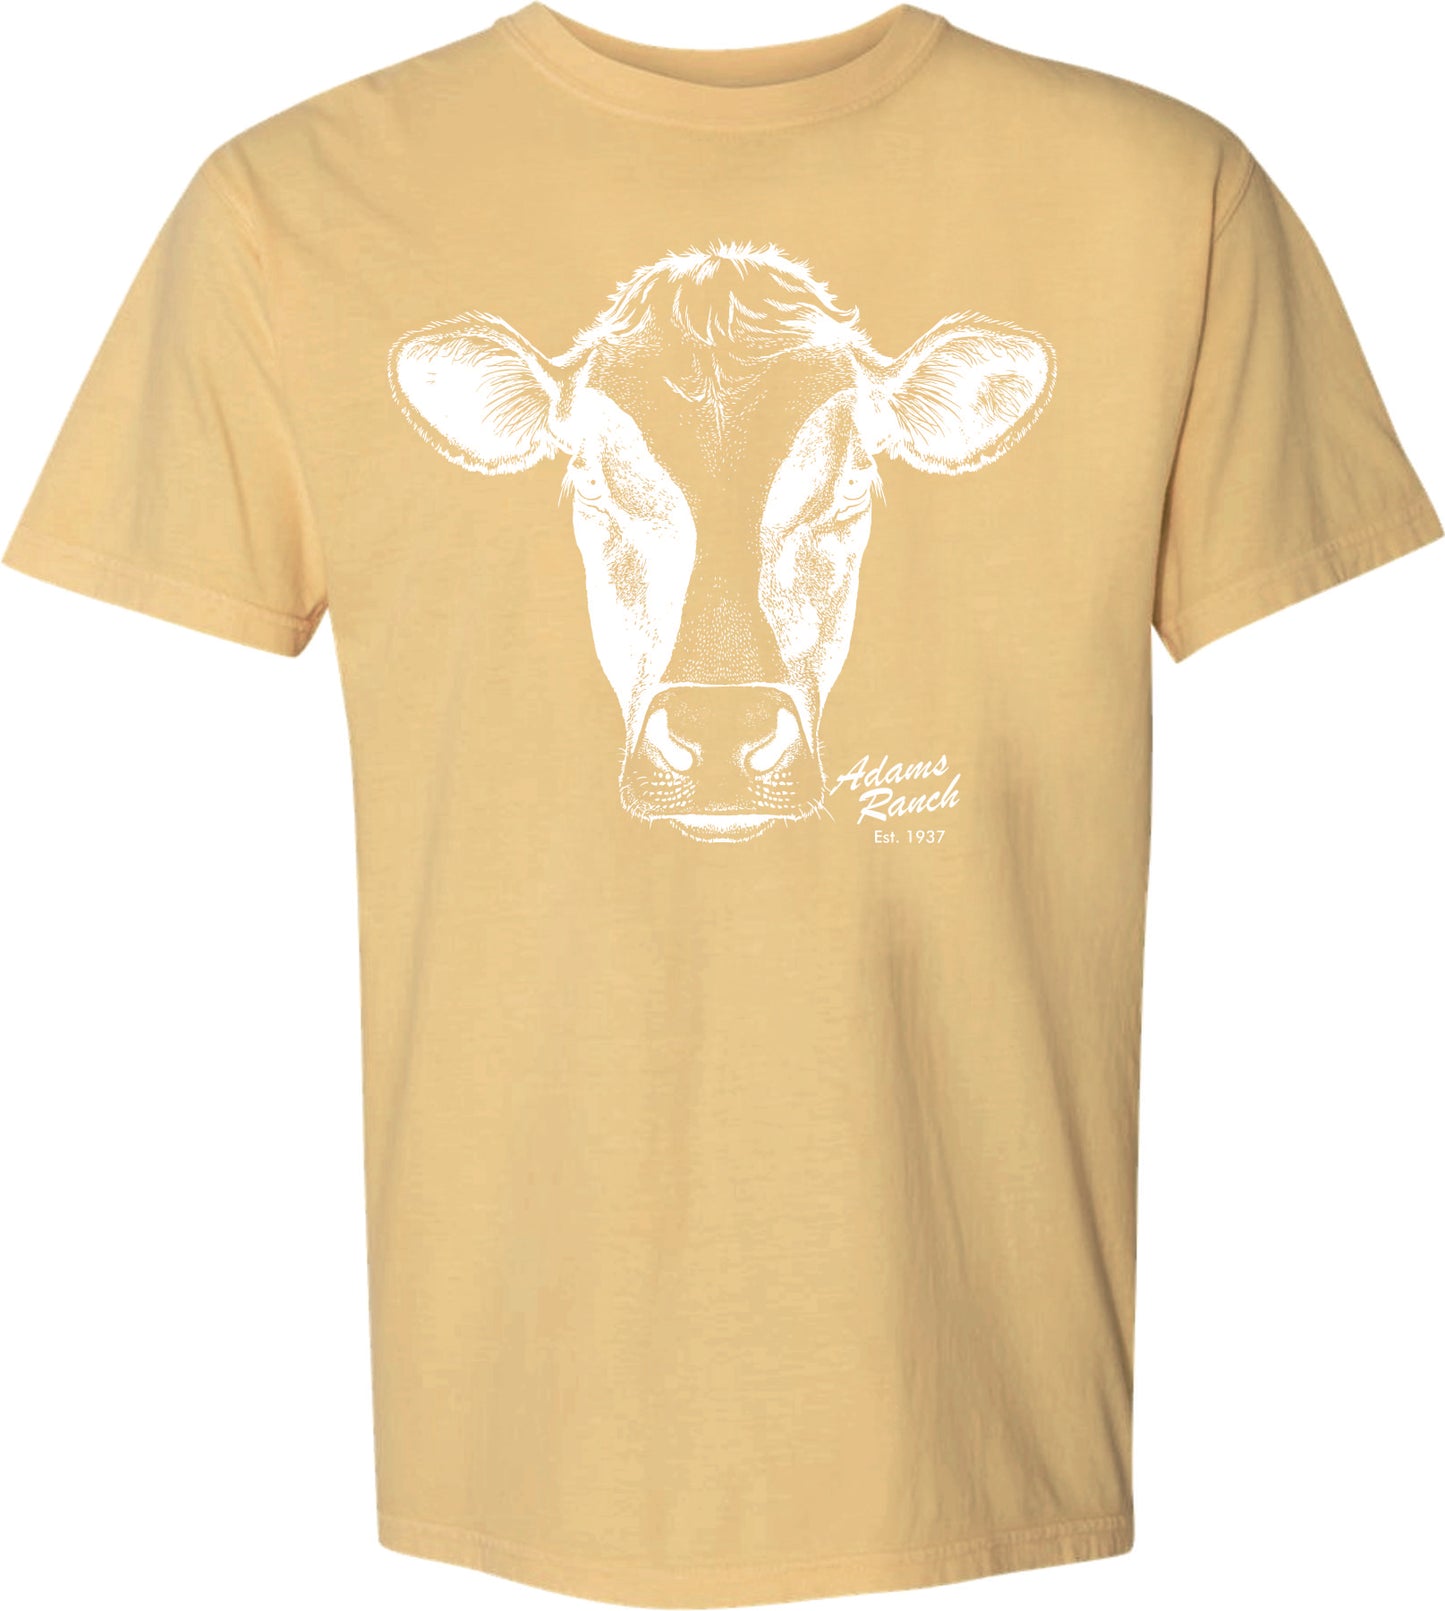 Adams Ranch Cow Shirt